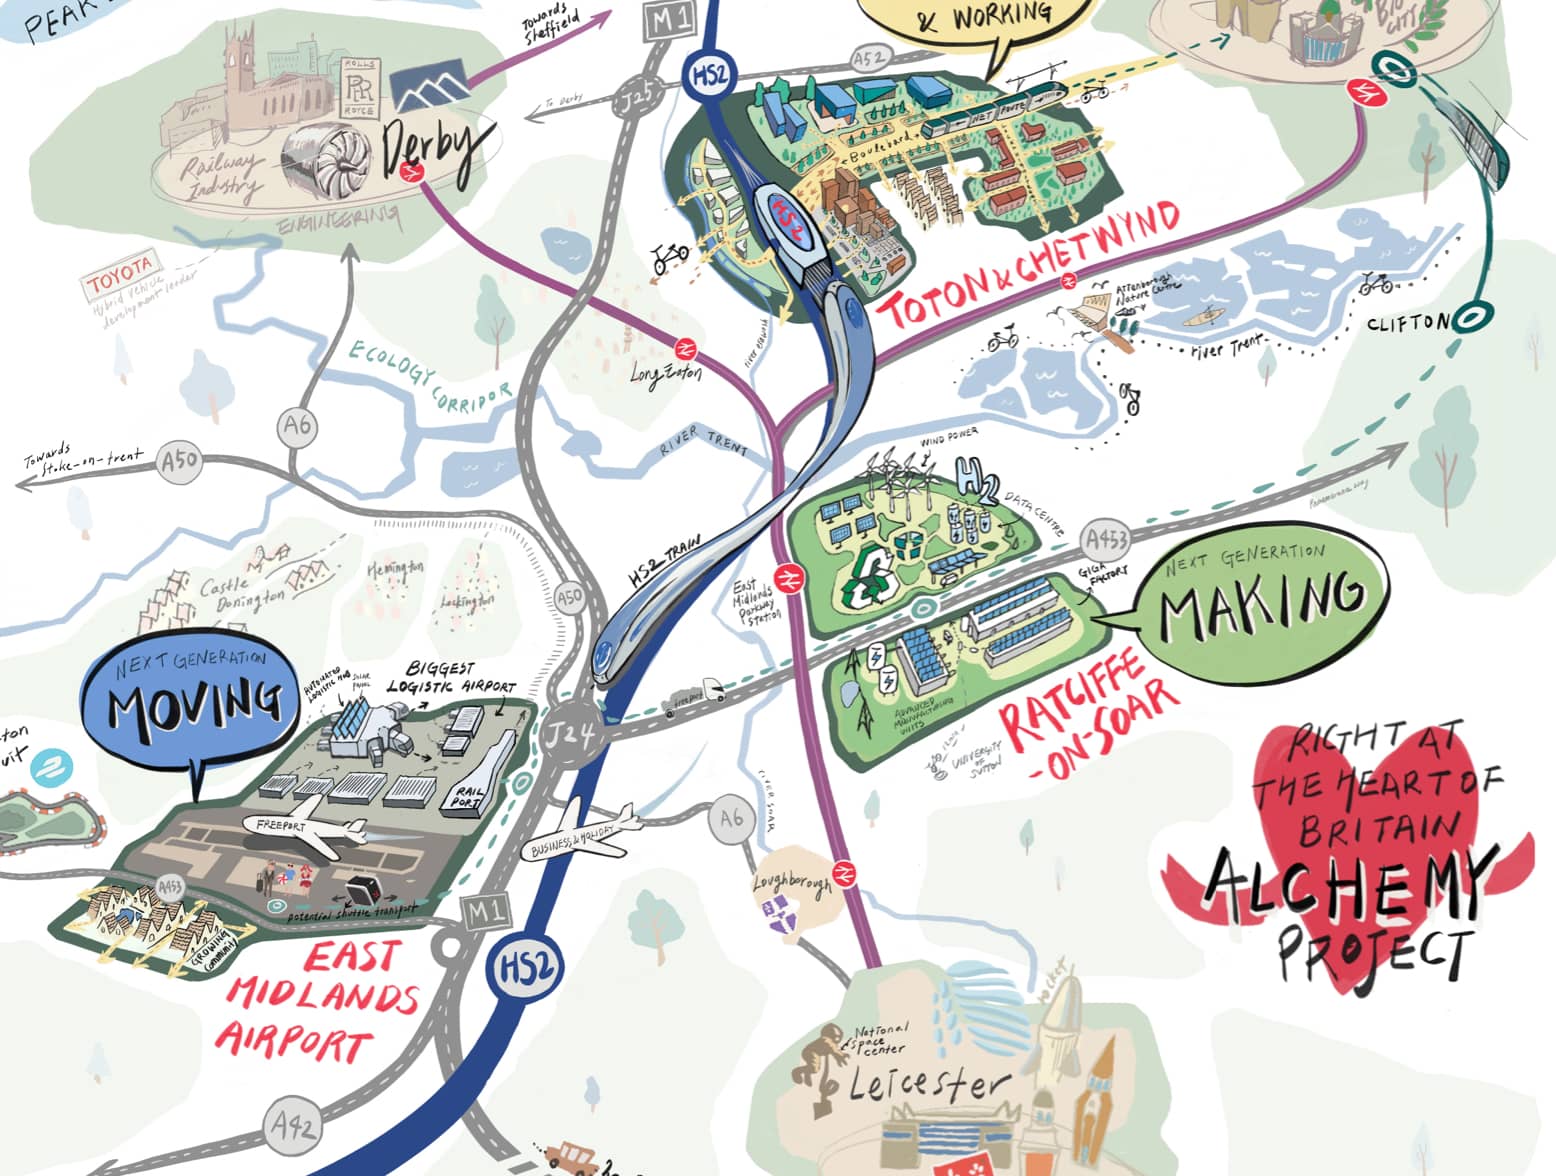 Toton_&_Chetwynd_East_Midlands_Hub_Map_2